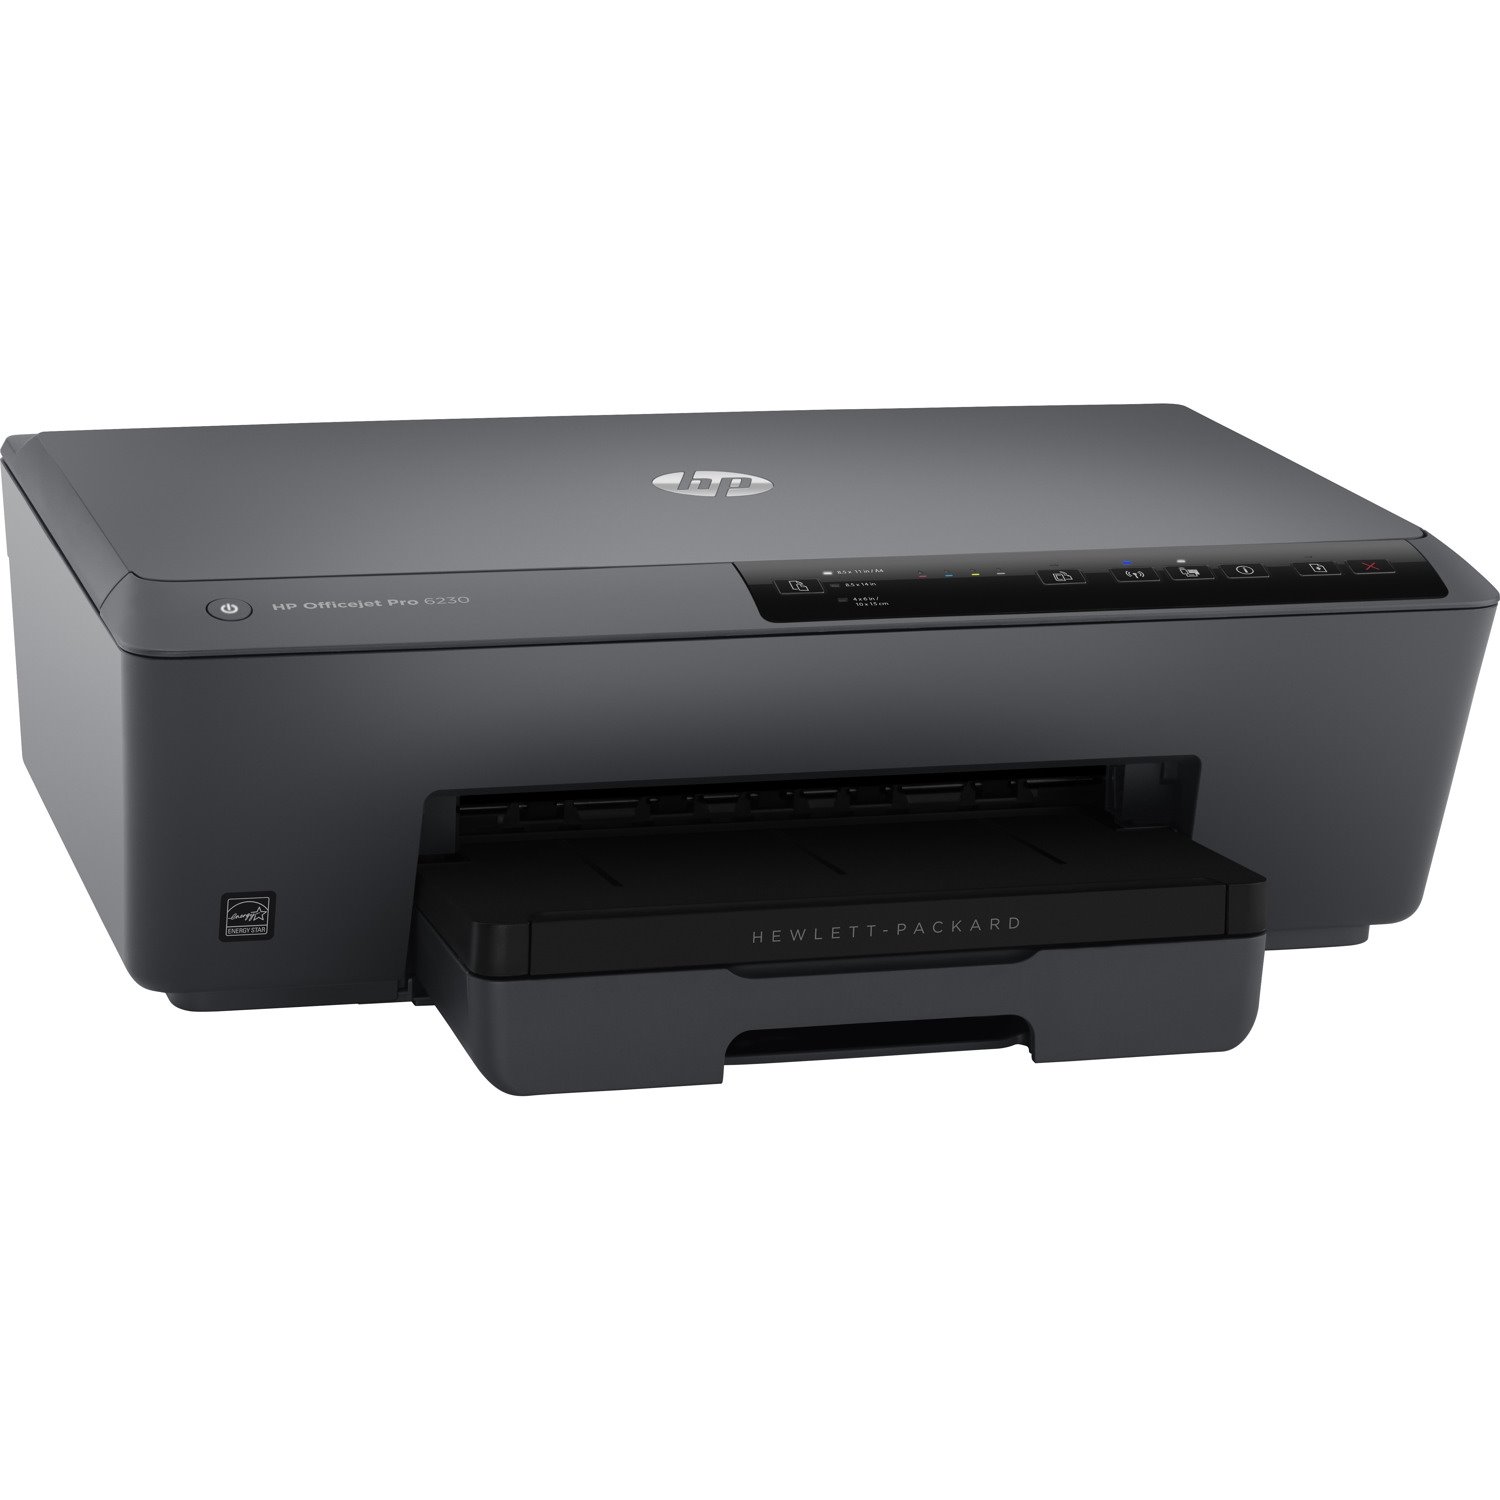 HP Officejet Pro 6230 Desktop Inkjet Printer - Colour